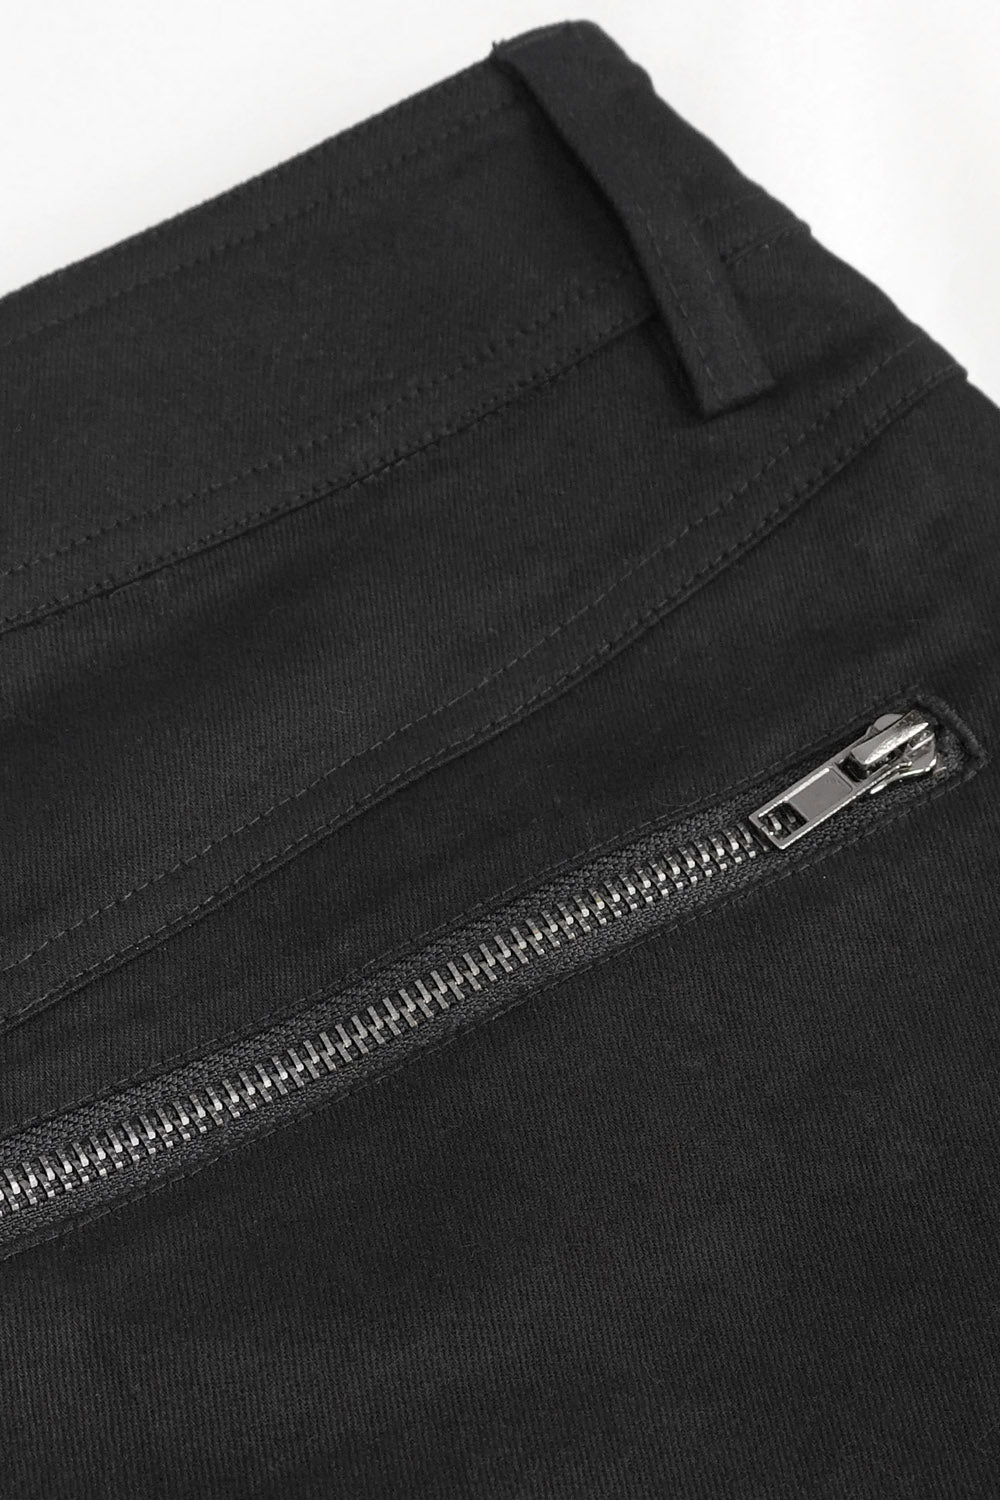 mens black pants with vegan leather straps